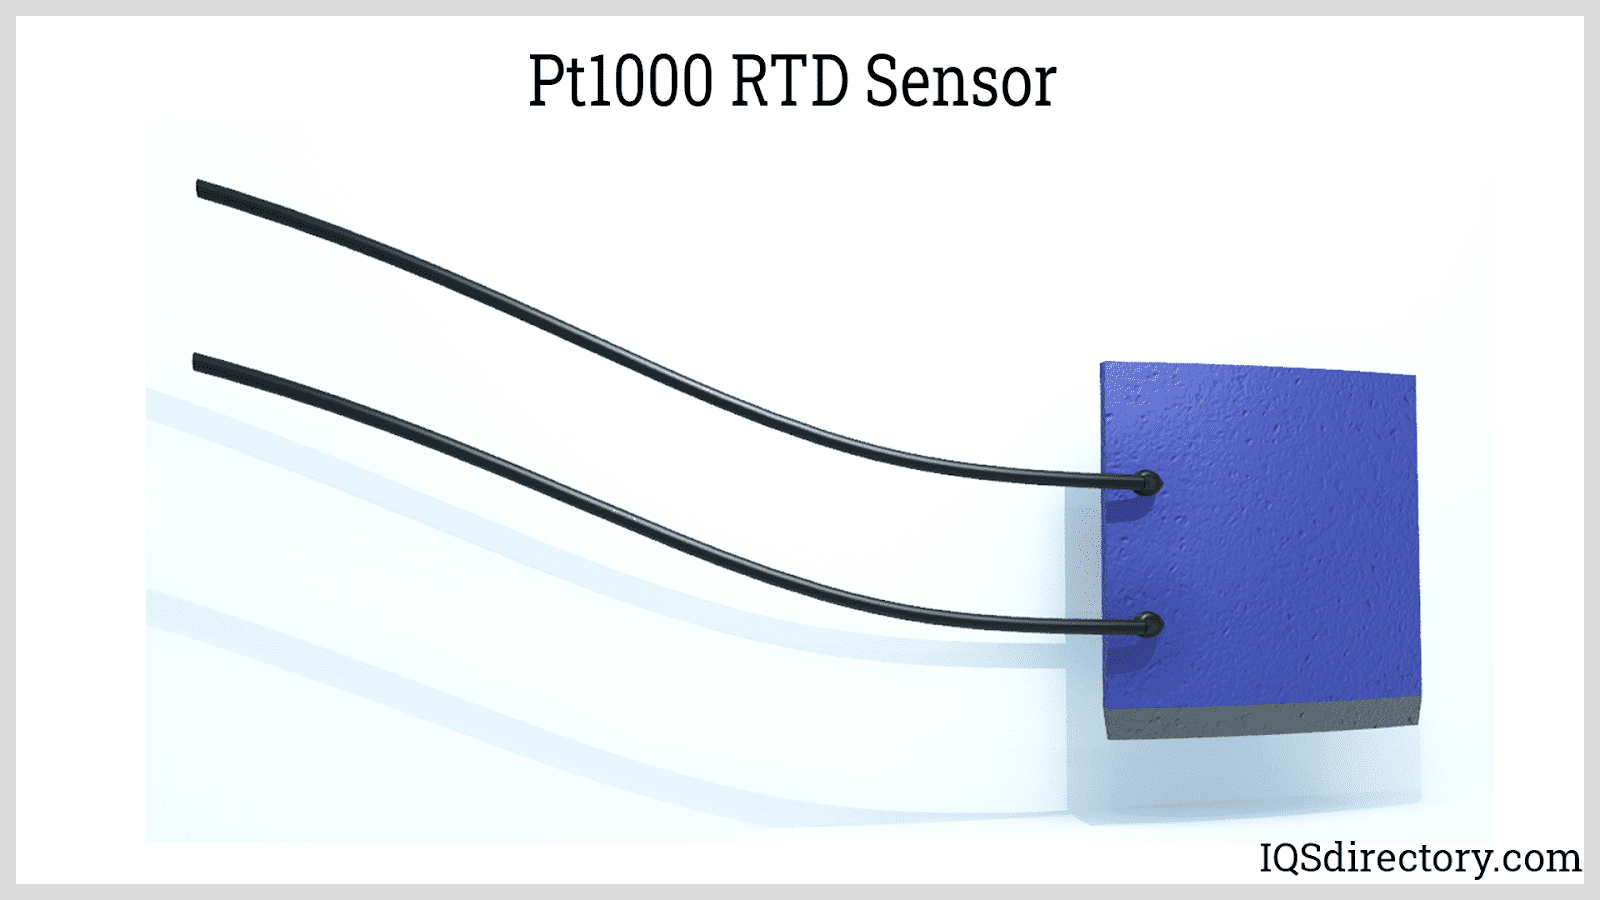 https://www.iqsdirectory.com/articles/thermocouple/rtd-sensors/pt1000-rtd-sensor.png